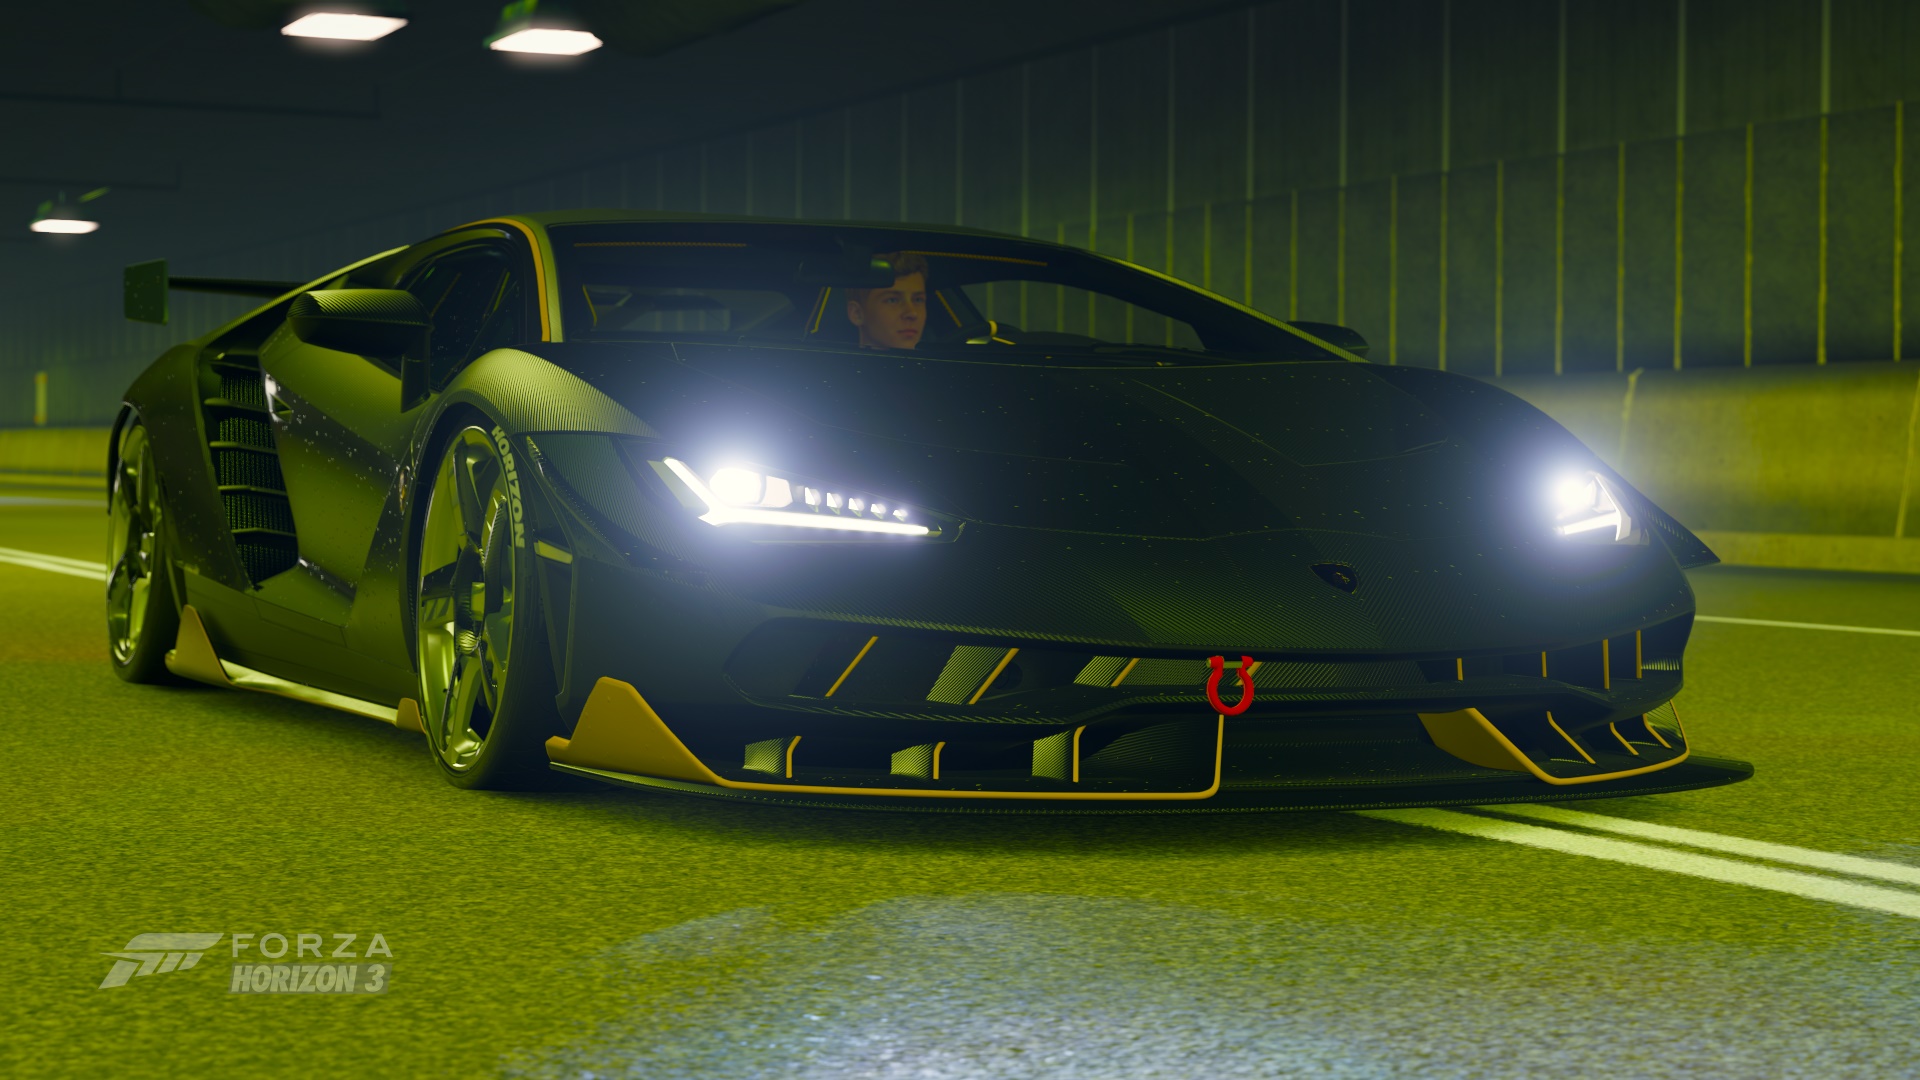 Car Forza Horizon 3 Lamborghini Lamborghini Centenario Video Game 1920x1080